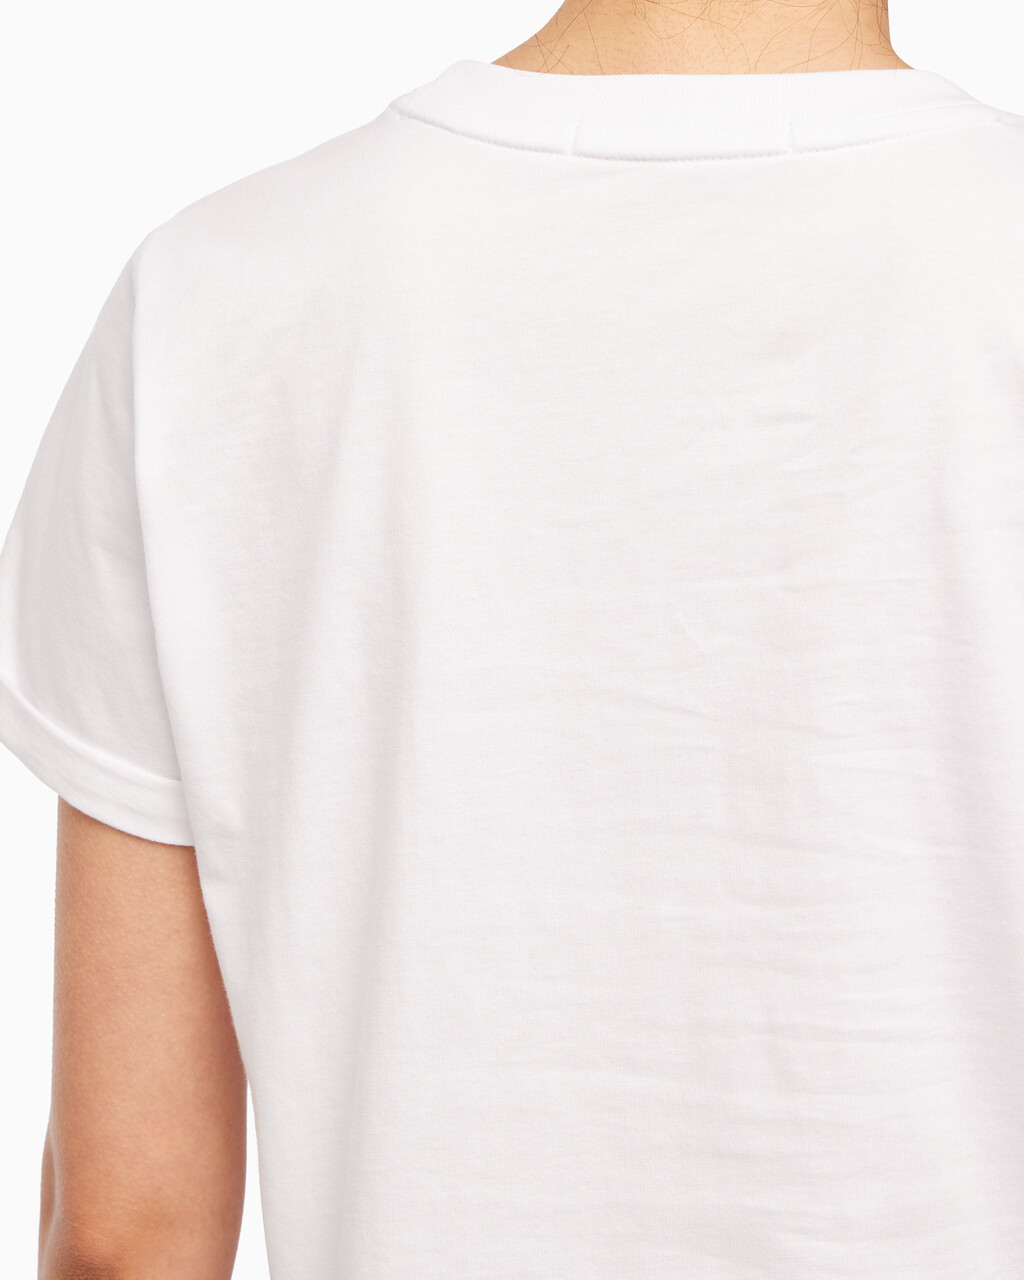 Buy 여성 모노그램 릴렉스핏 크롭 반팔 티셔츠 in color BRIGHT WHITE